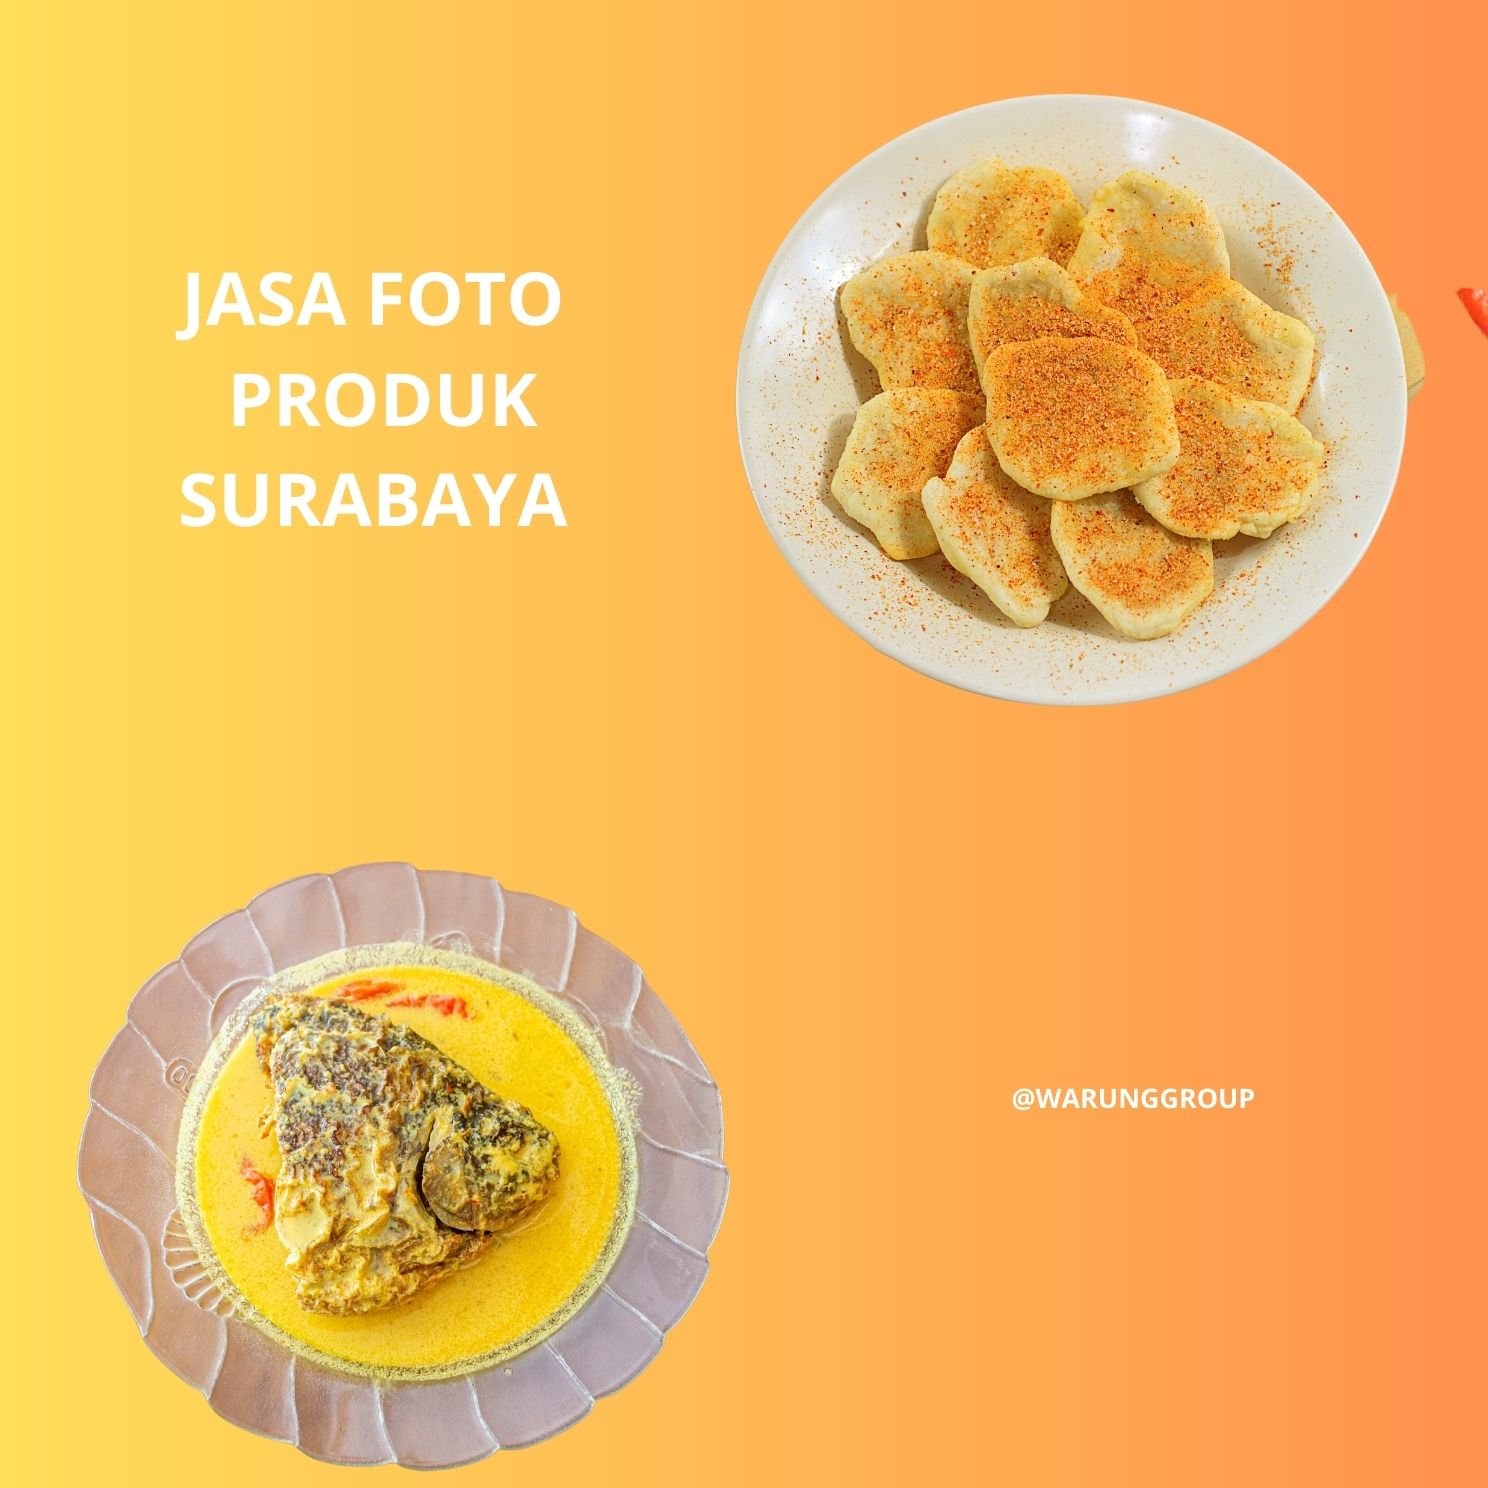 Pengertian Jasa Foto Produk Surabaya